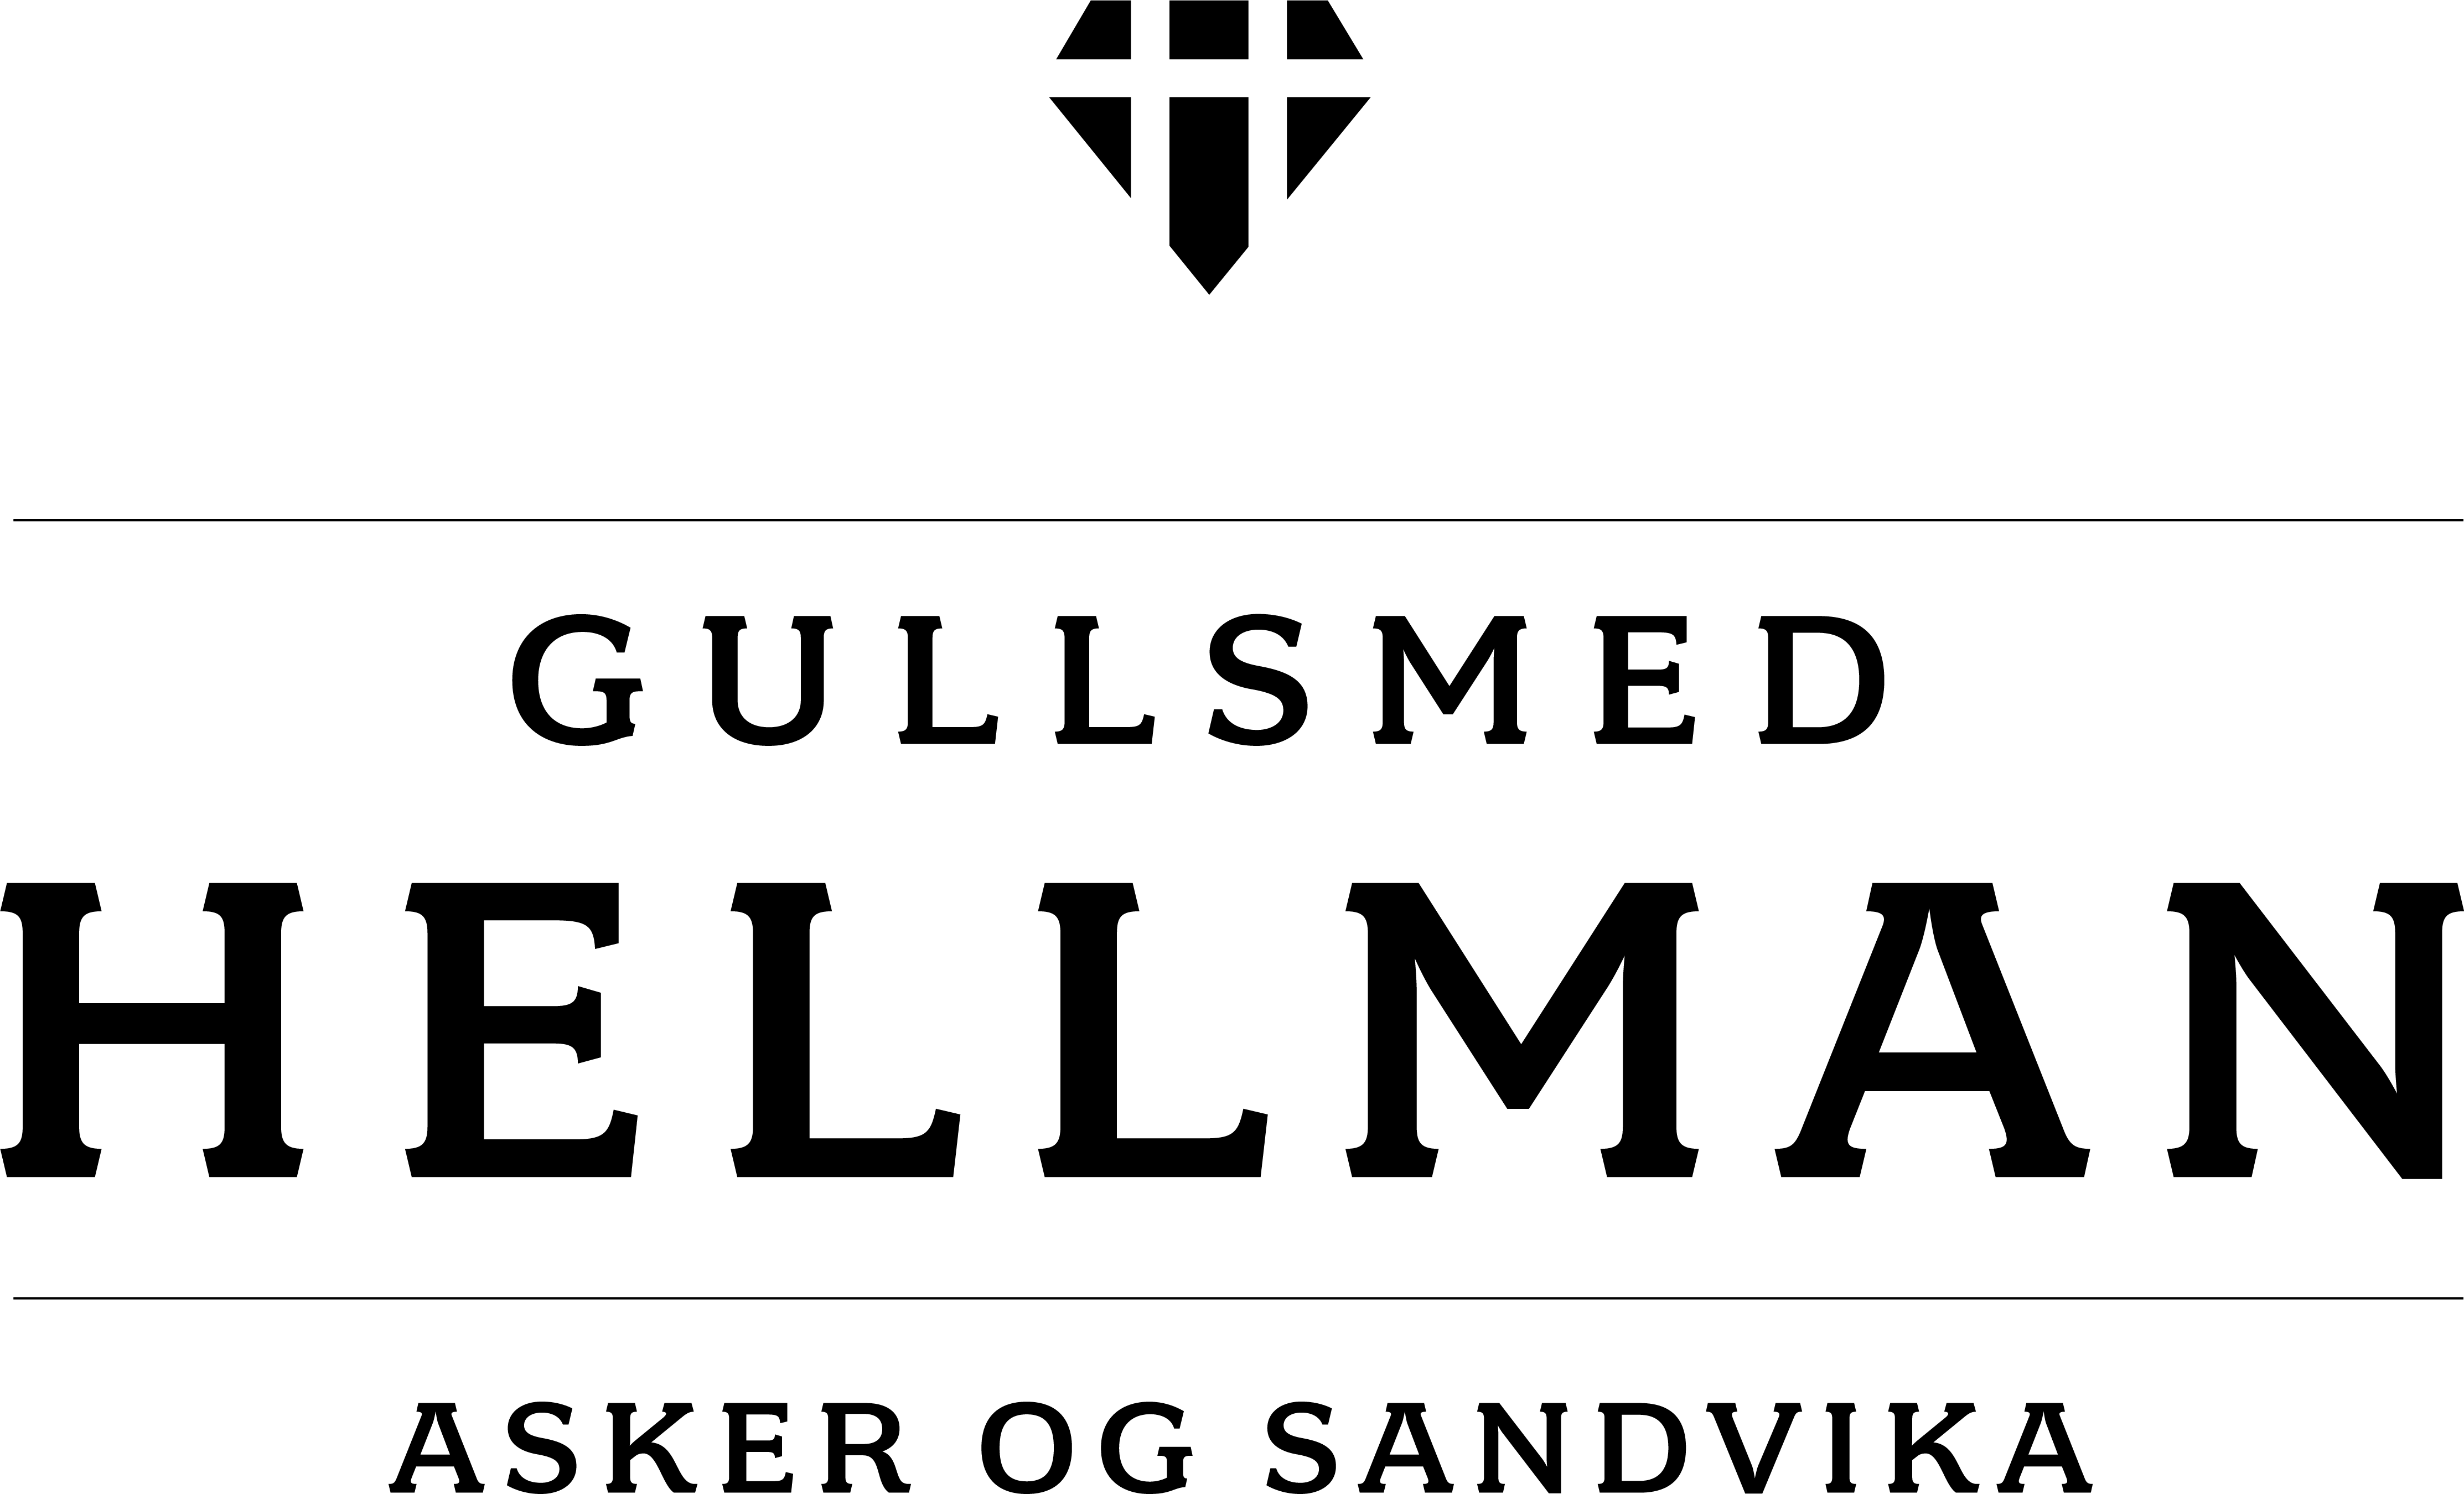 Gullsmed Hellman logo